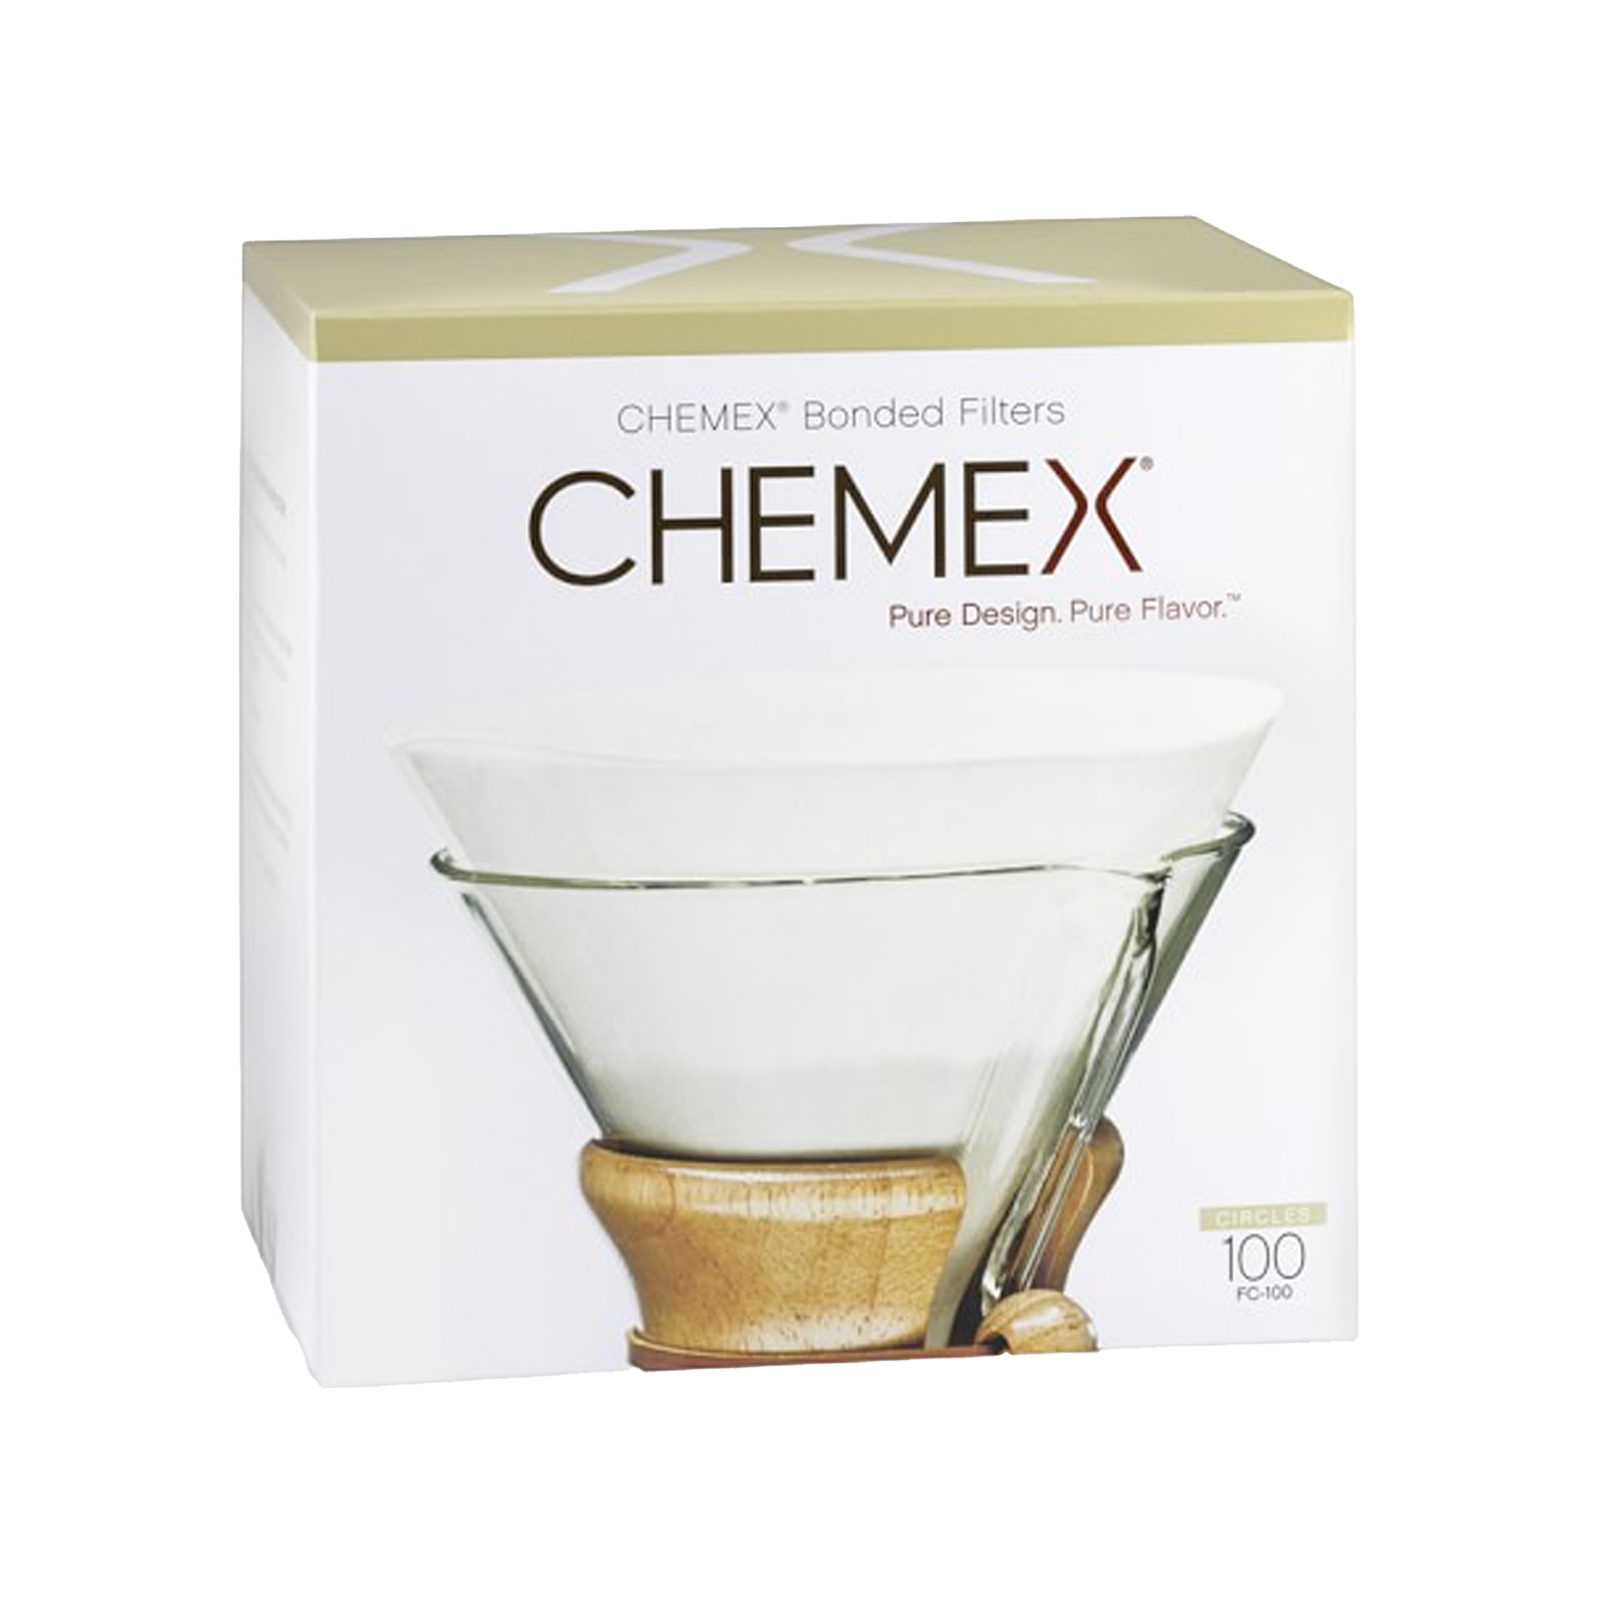 CHEMEX® Bonded Filters Range